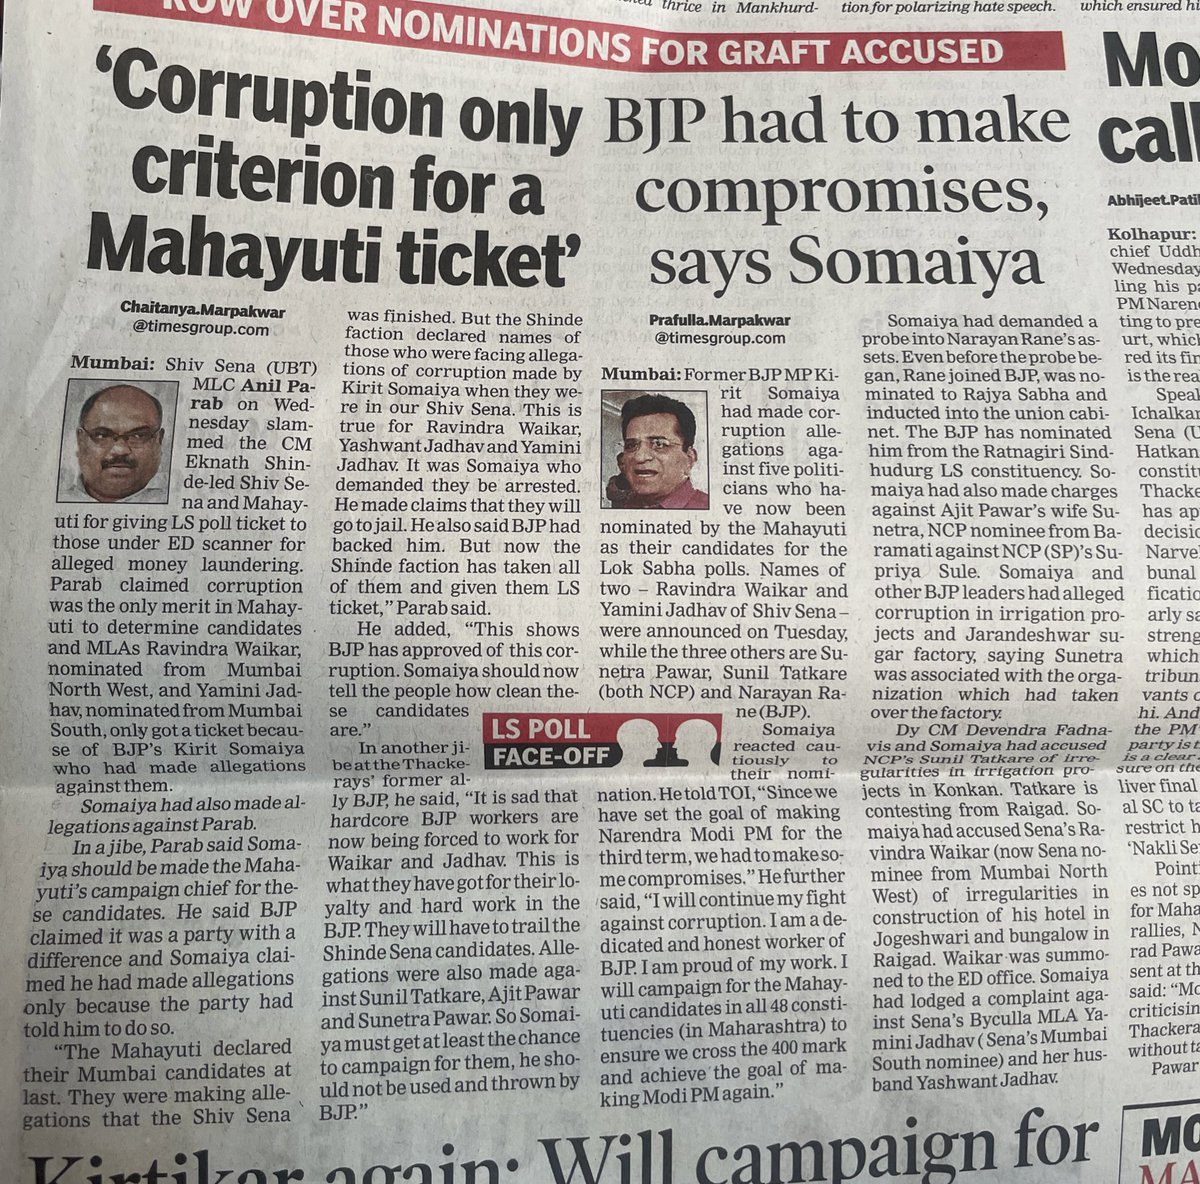 Shiv Sena (UBT) Anil Parab slams Maha Yuti over giving tickets to those under ED scanner for money laundering. Parab said corruption was the only merit in Maha Yuti to decide candidates. So MLAs Ravindra Waikar & Yamini Jadhav got tickets because of Kirit Somaiya. @advanilparab